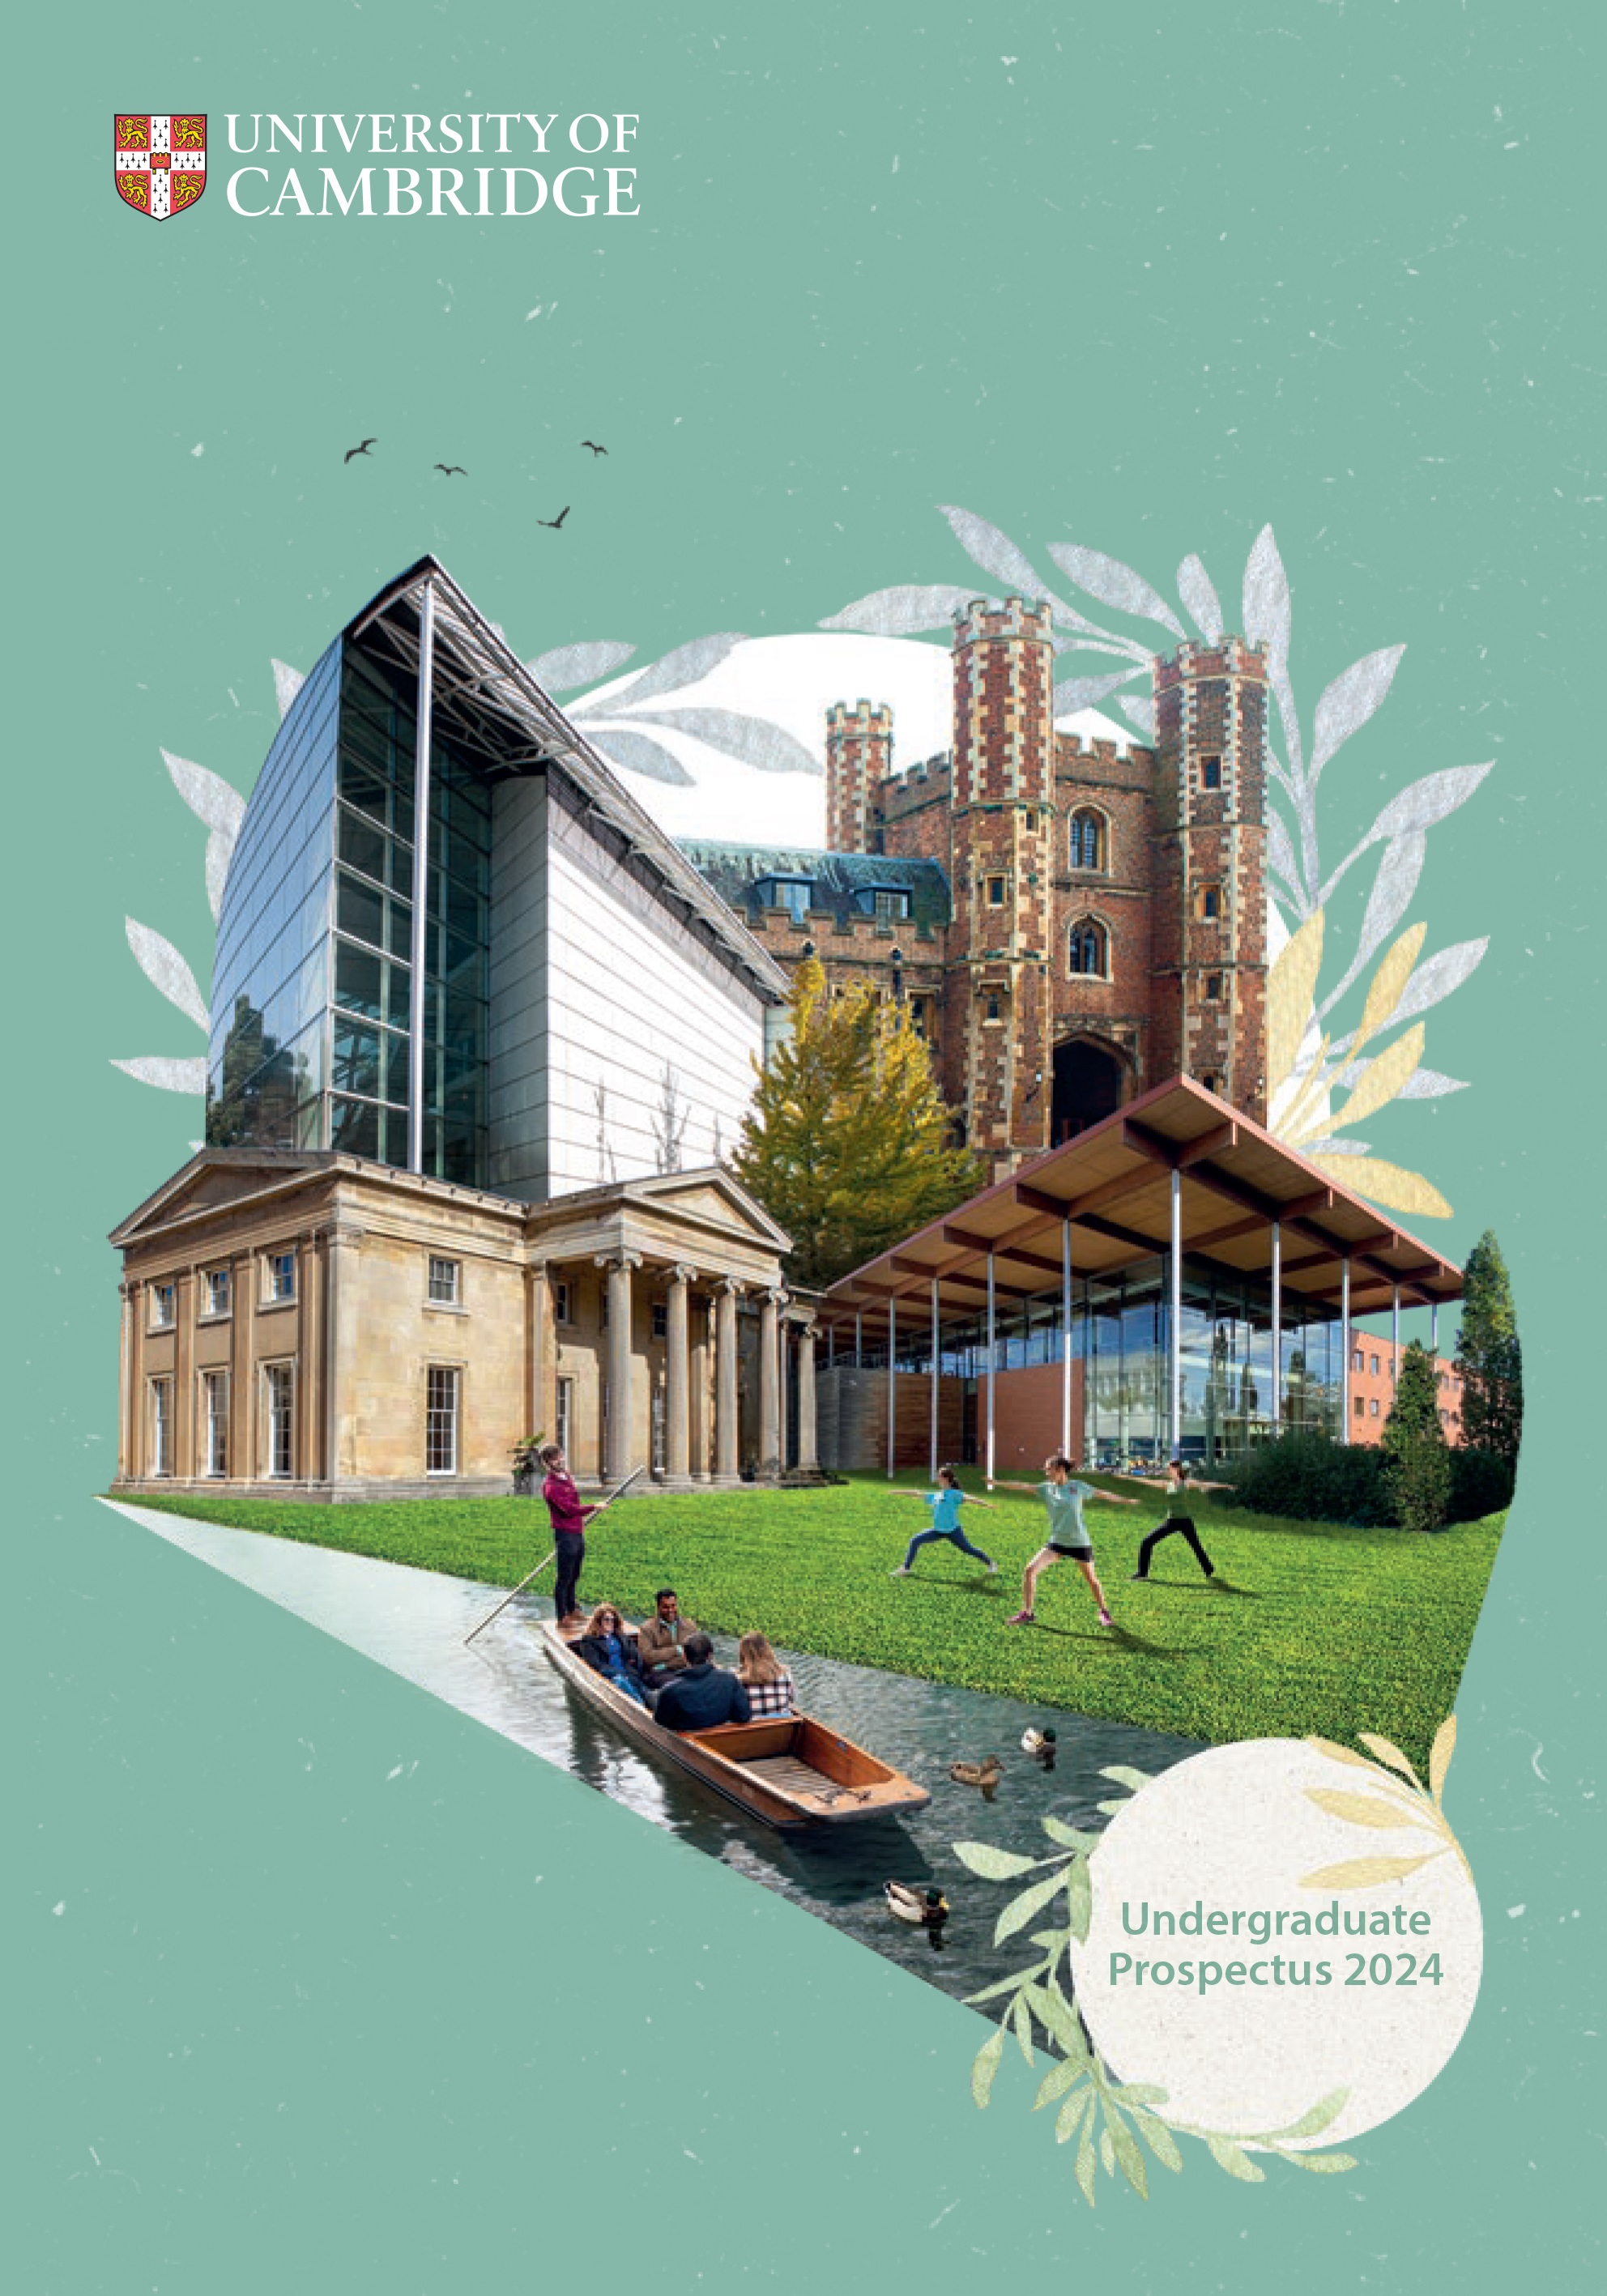 University of Cambridge undergraduate prospectus cover